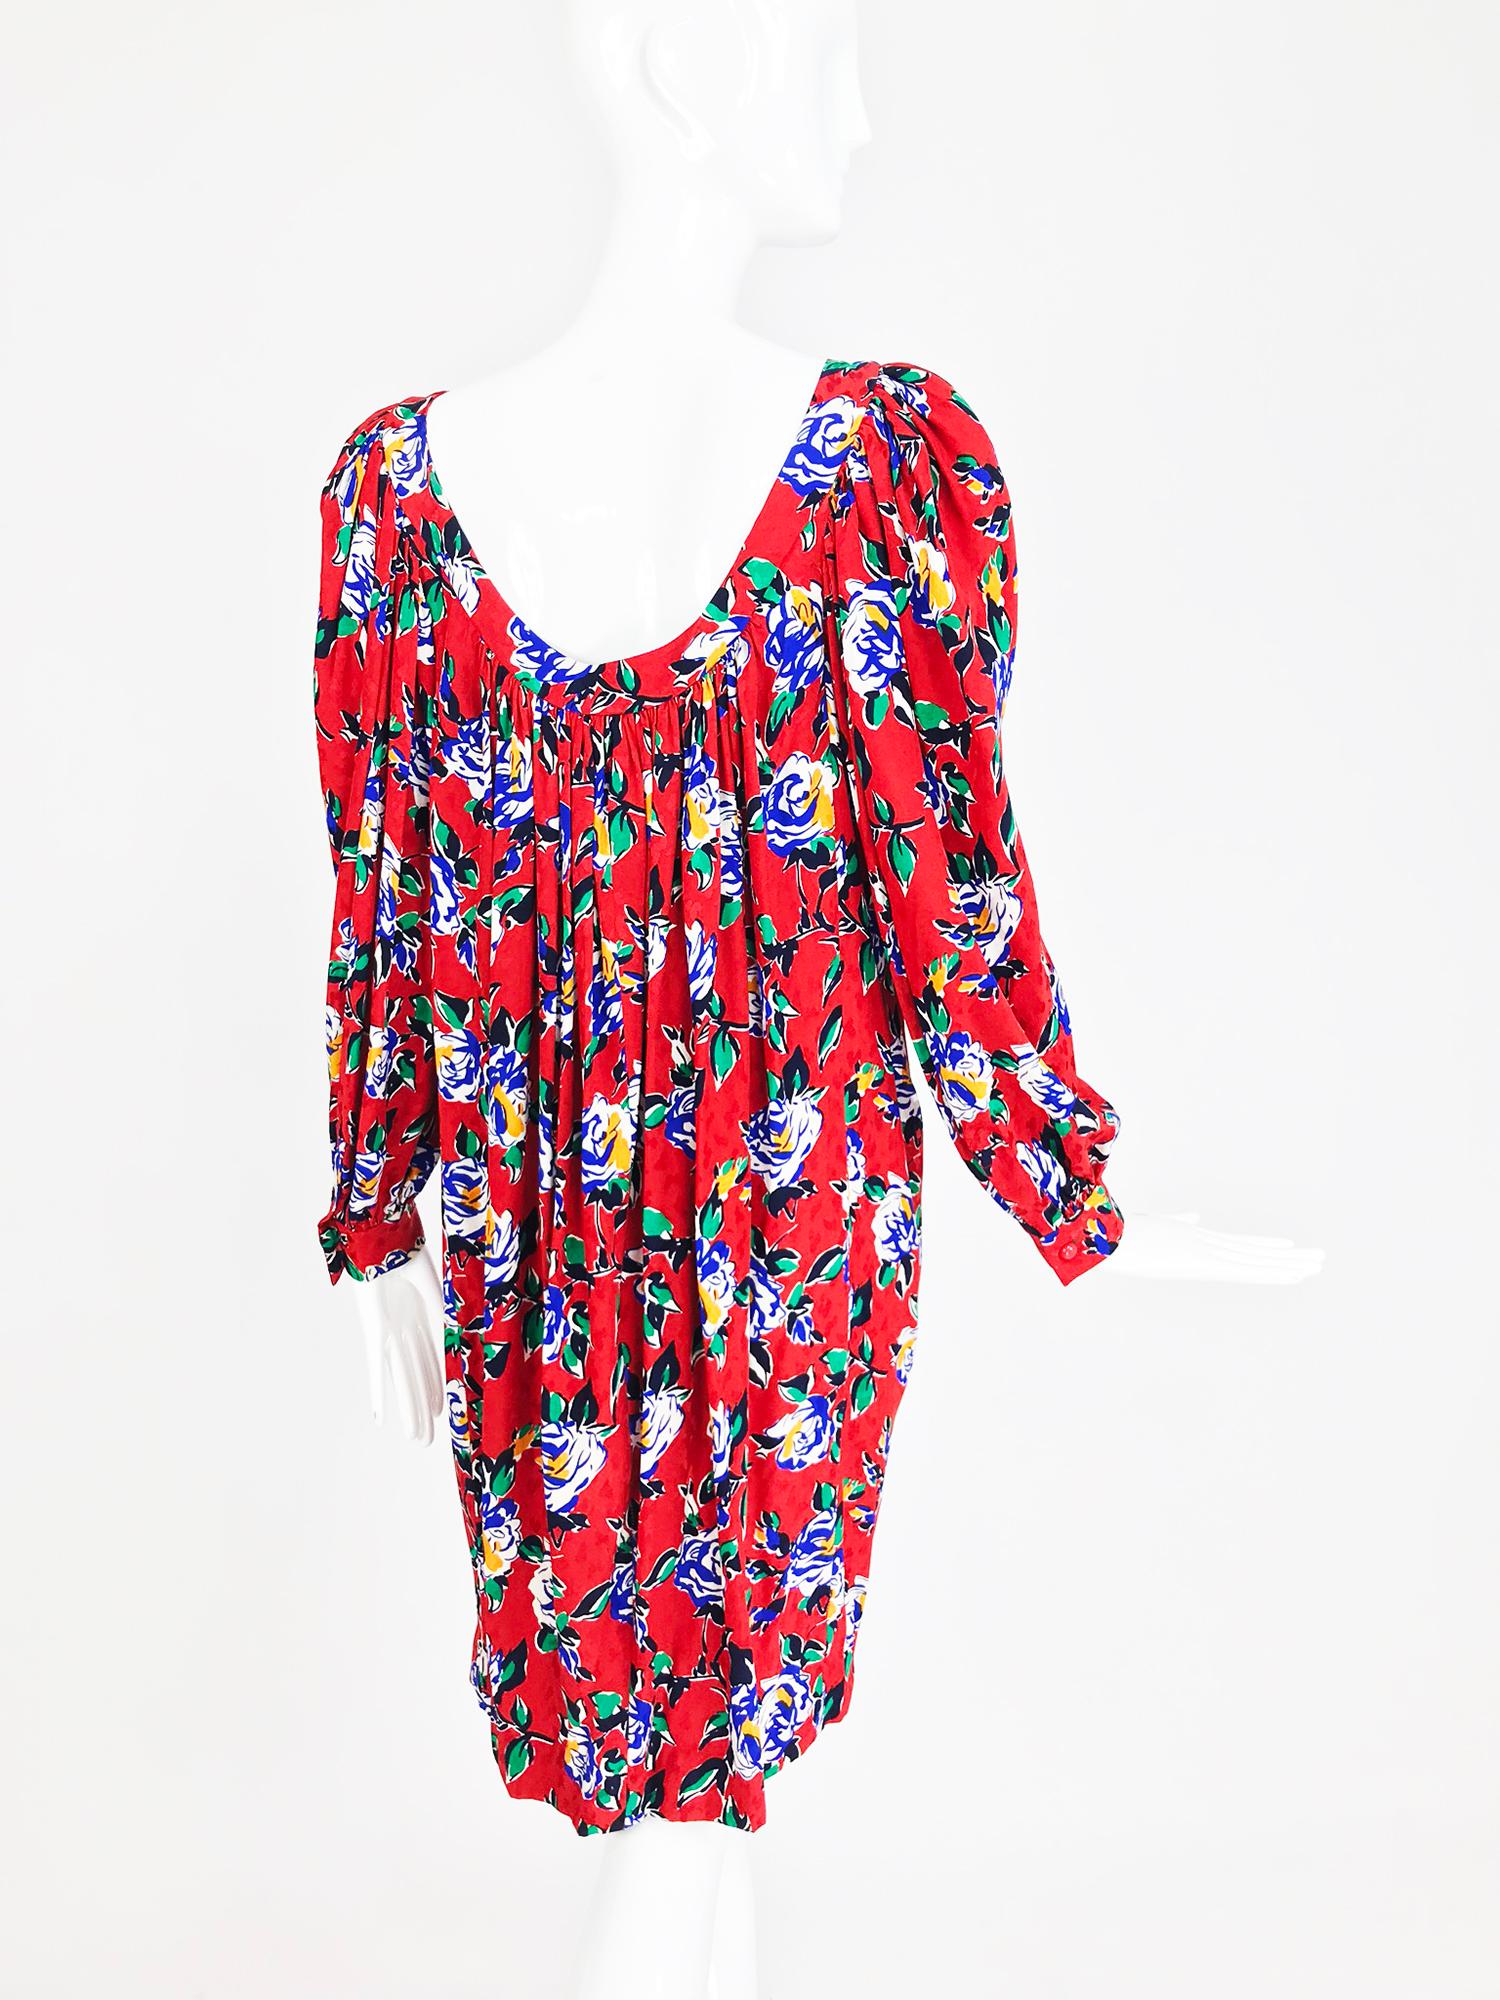 Yves Saint Laurent Red Floral Silk Jacquard Scoop Neck Dress, 1980s 3